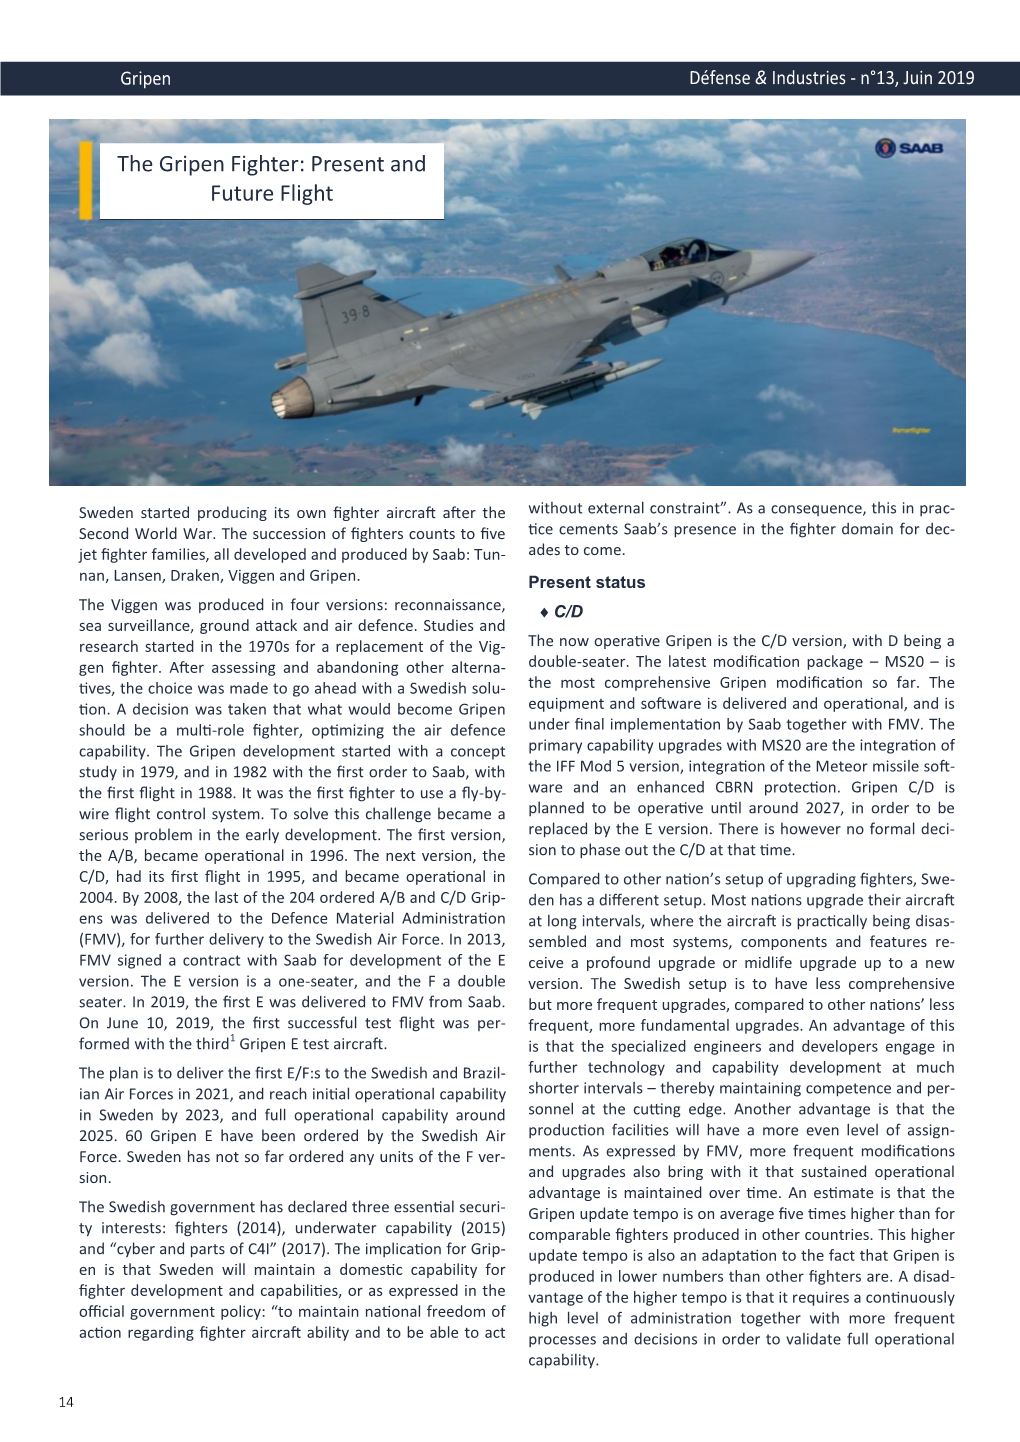 The Gripen Fighter: Present and Future Flight